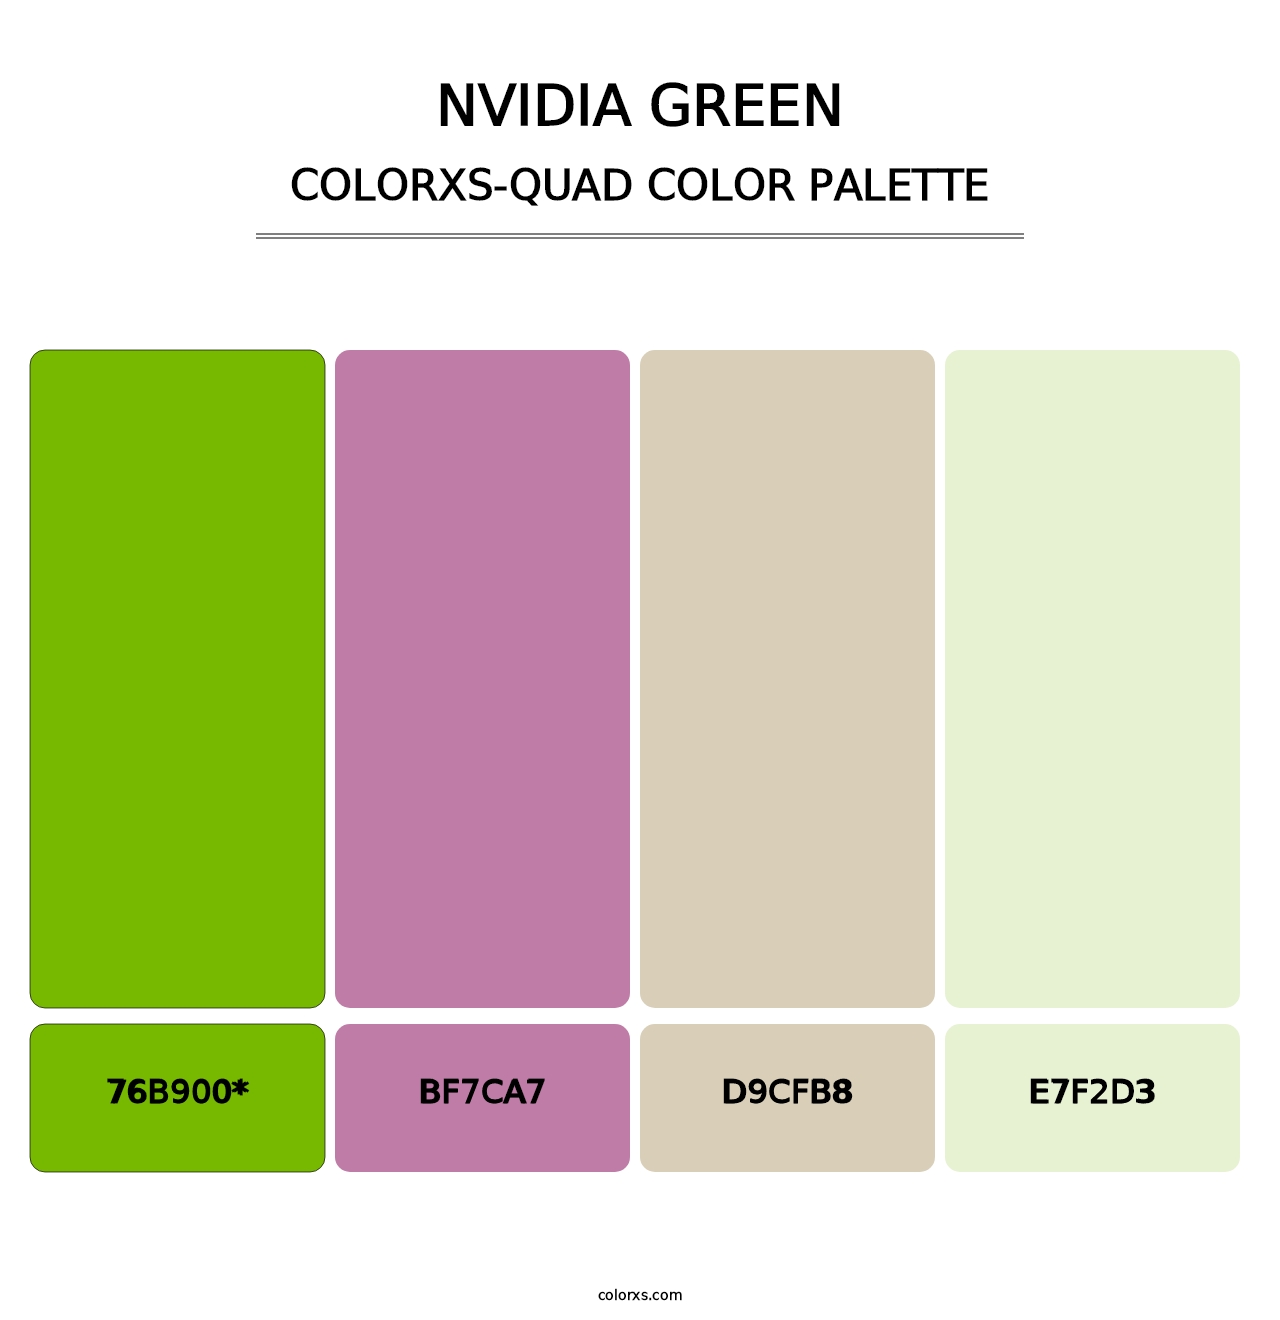 Nvidia Green - Colorxs Quad Palette